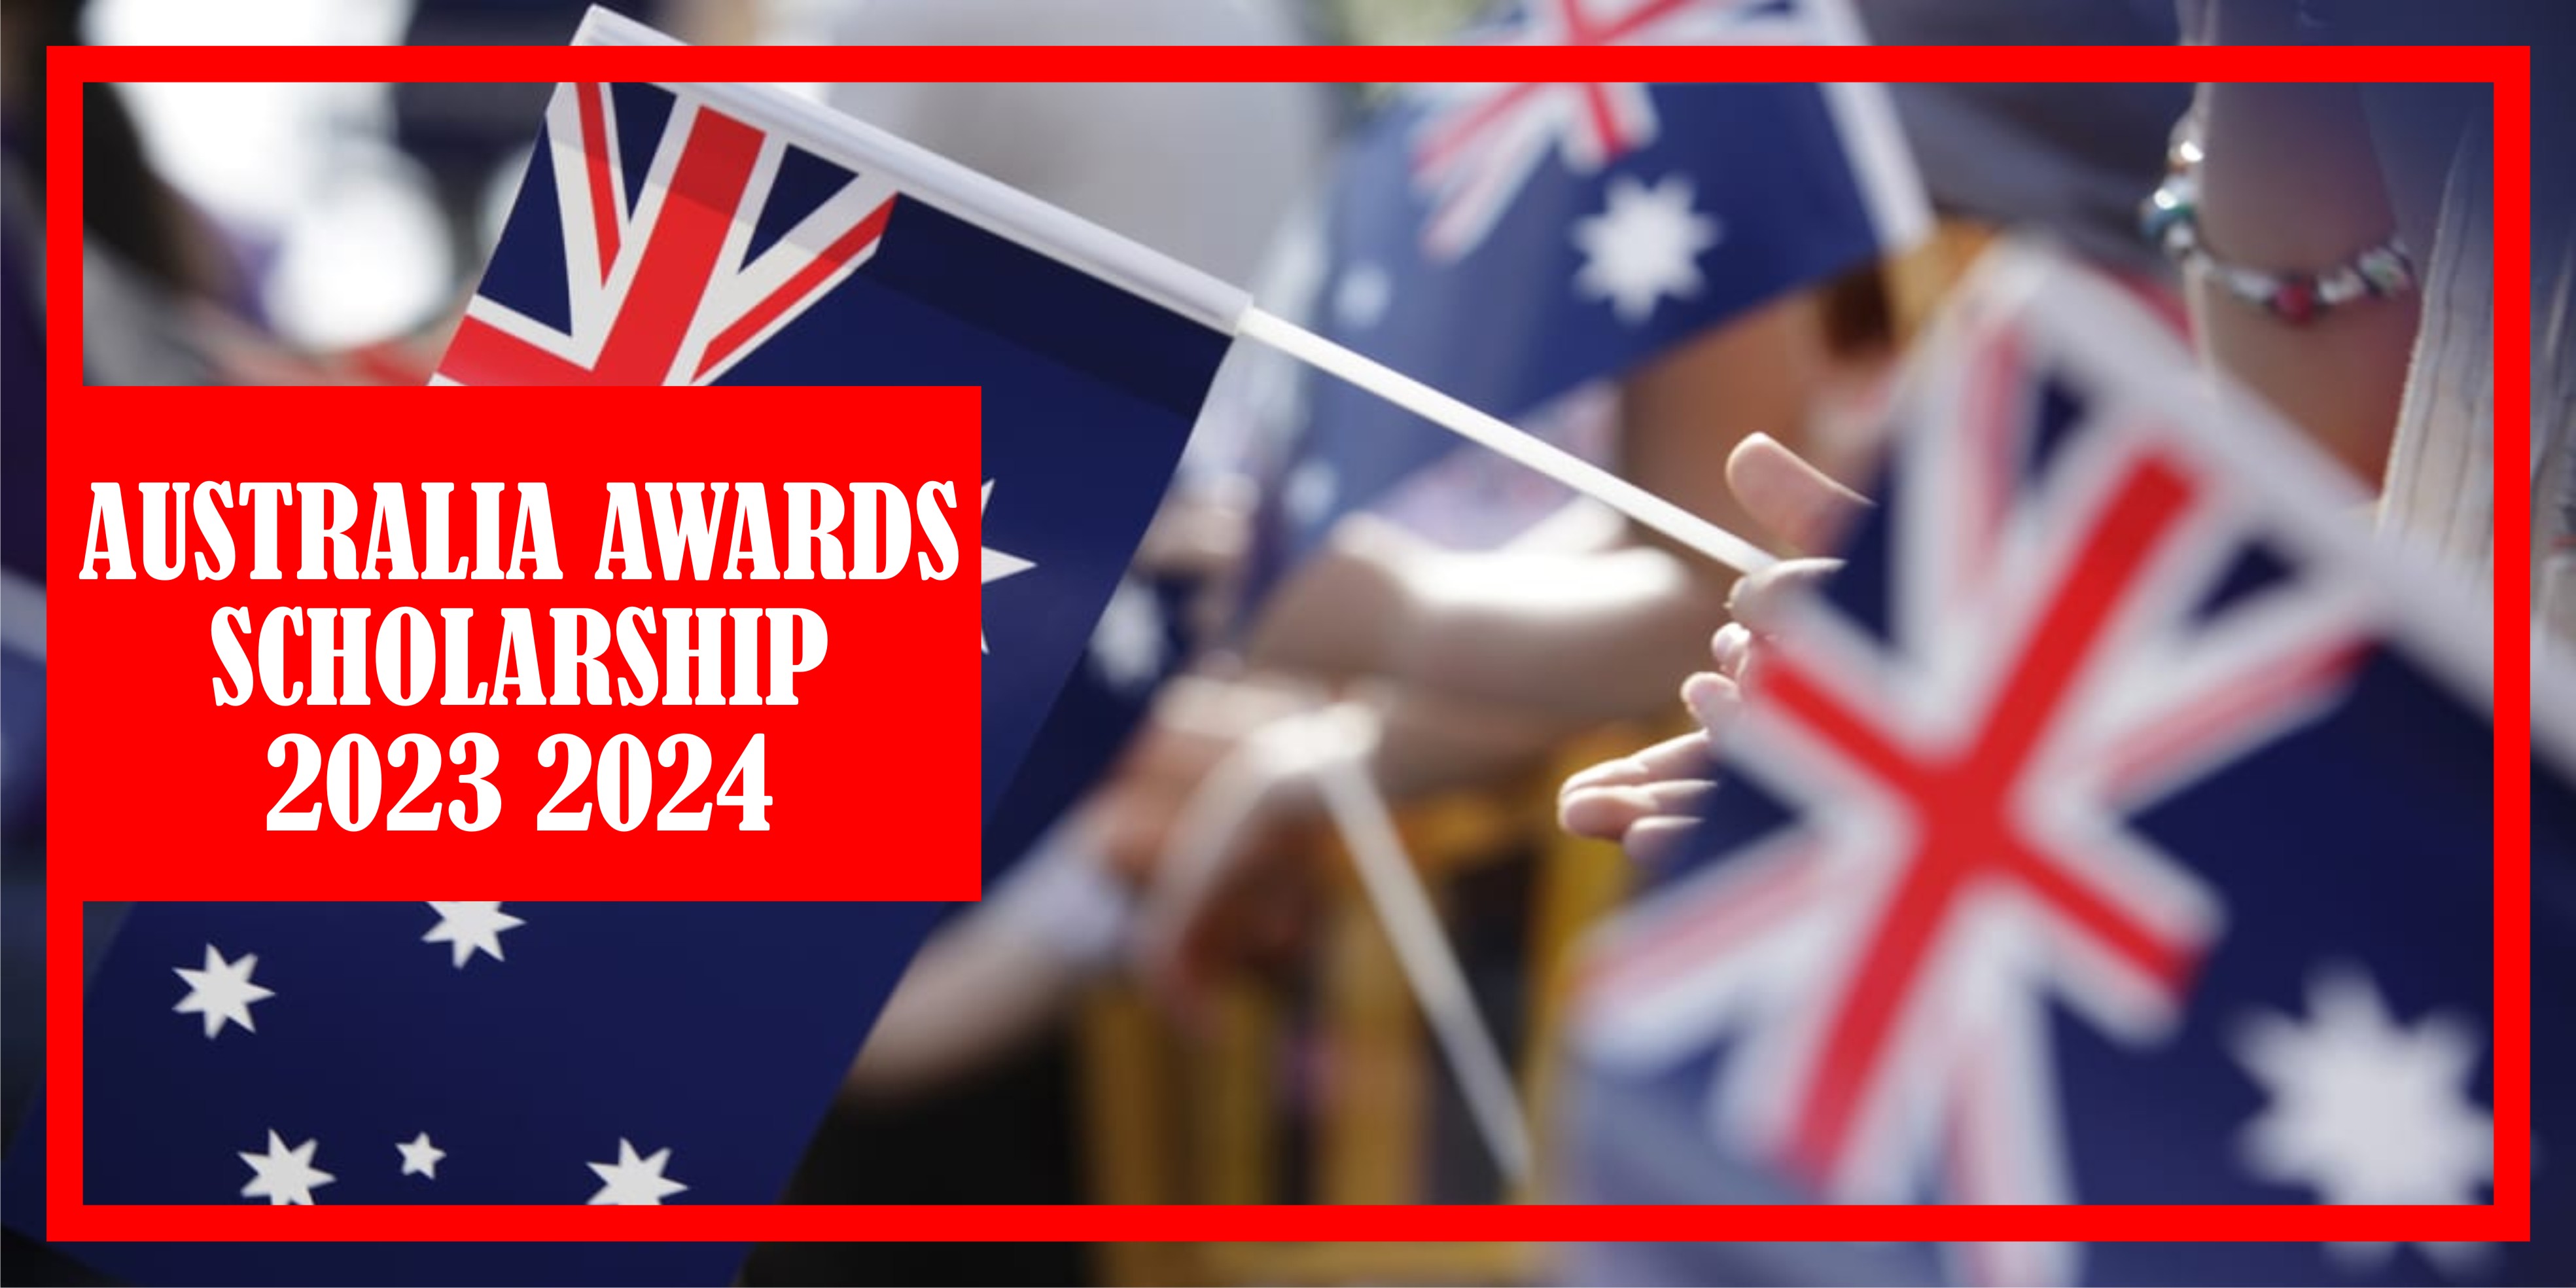 Beasiswa Australia Awards Scholarship (AAS) 2023 2024 | IDBeasiswa